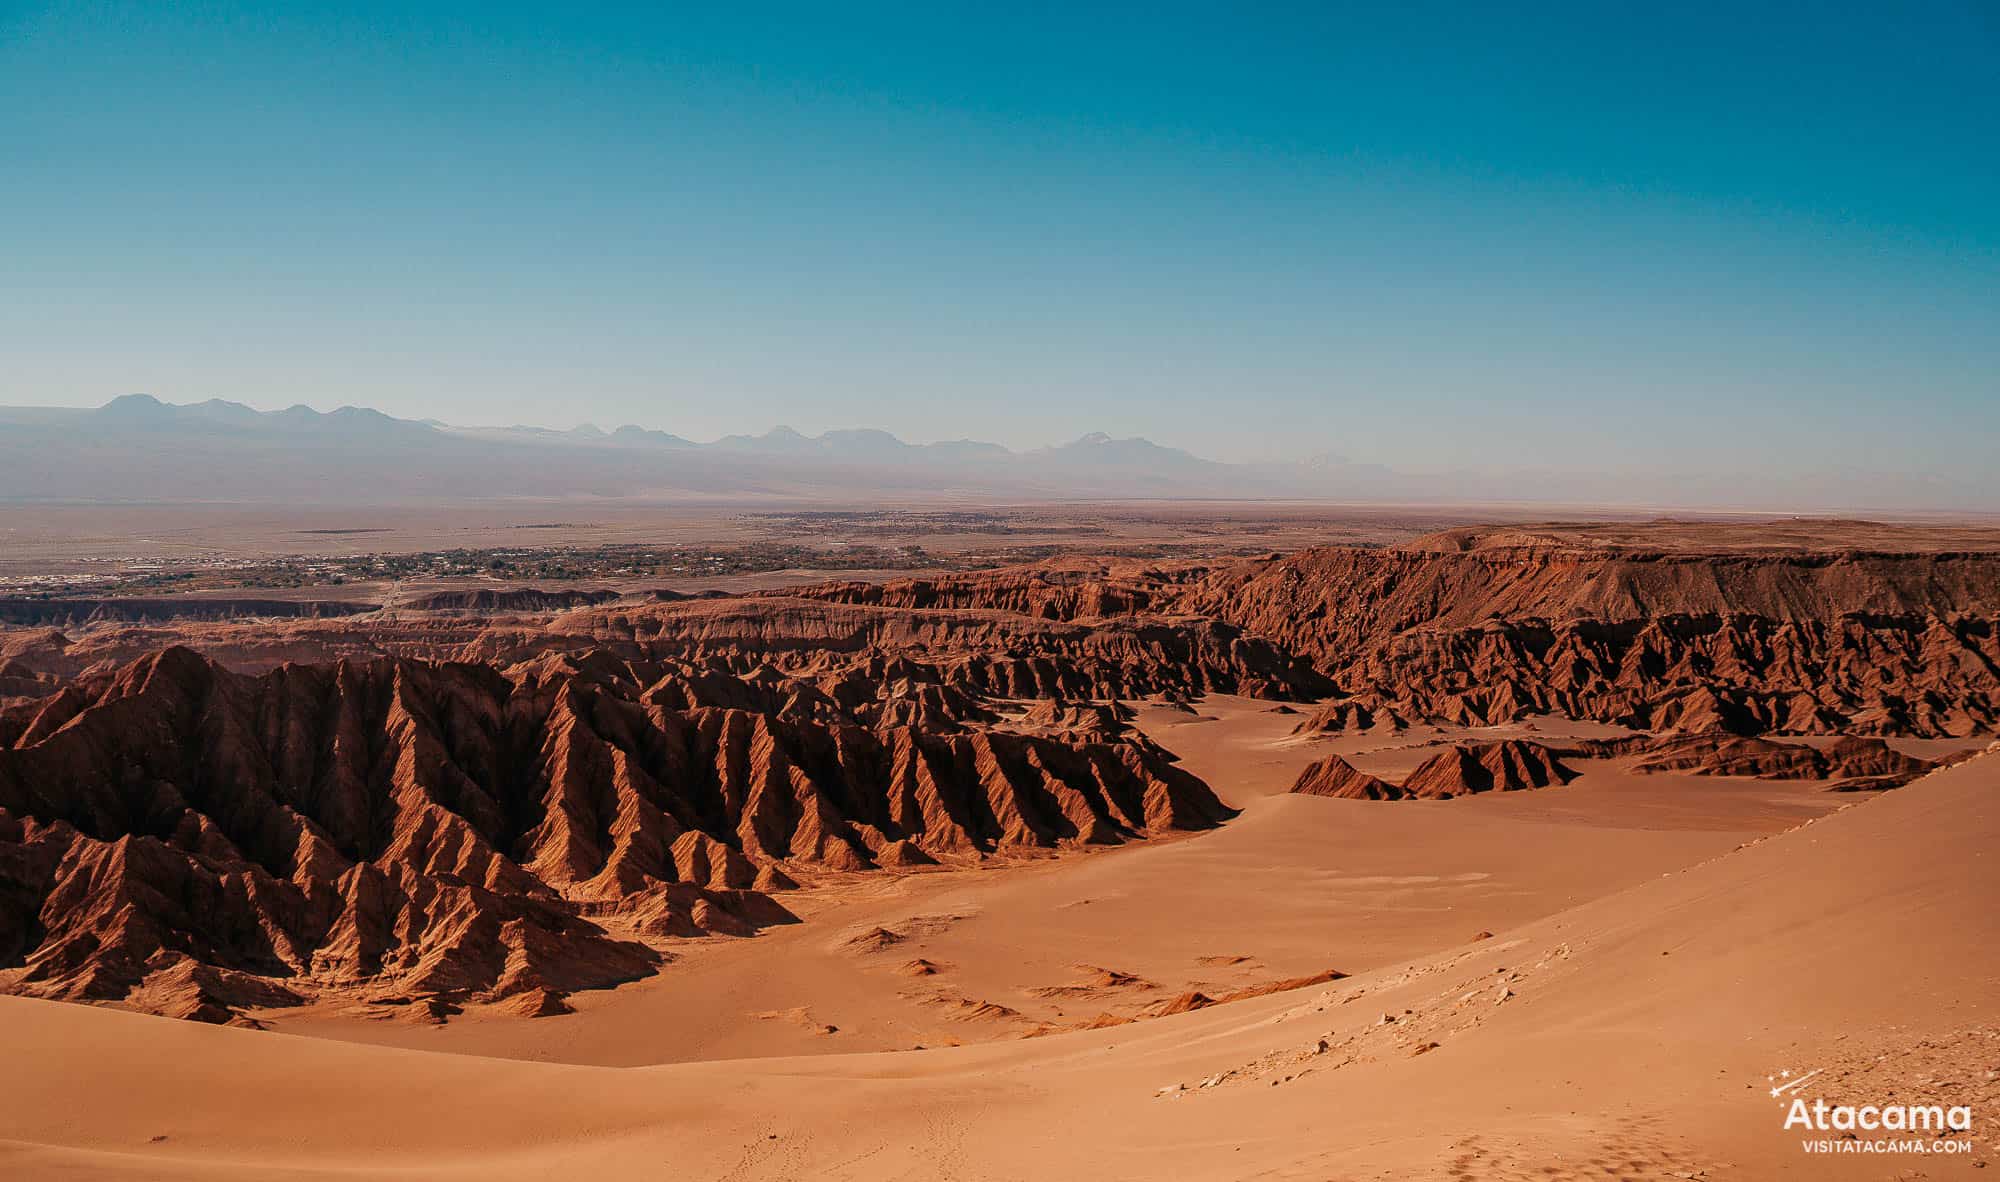 How to get to the Atacama Desert